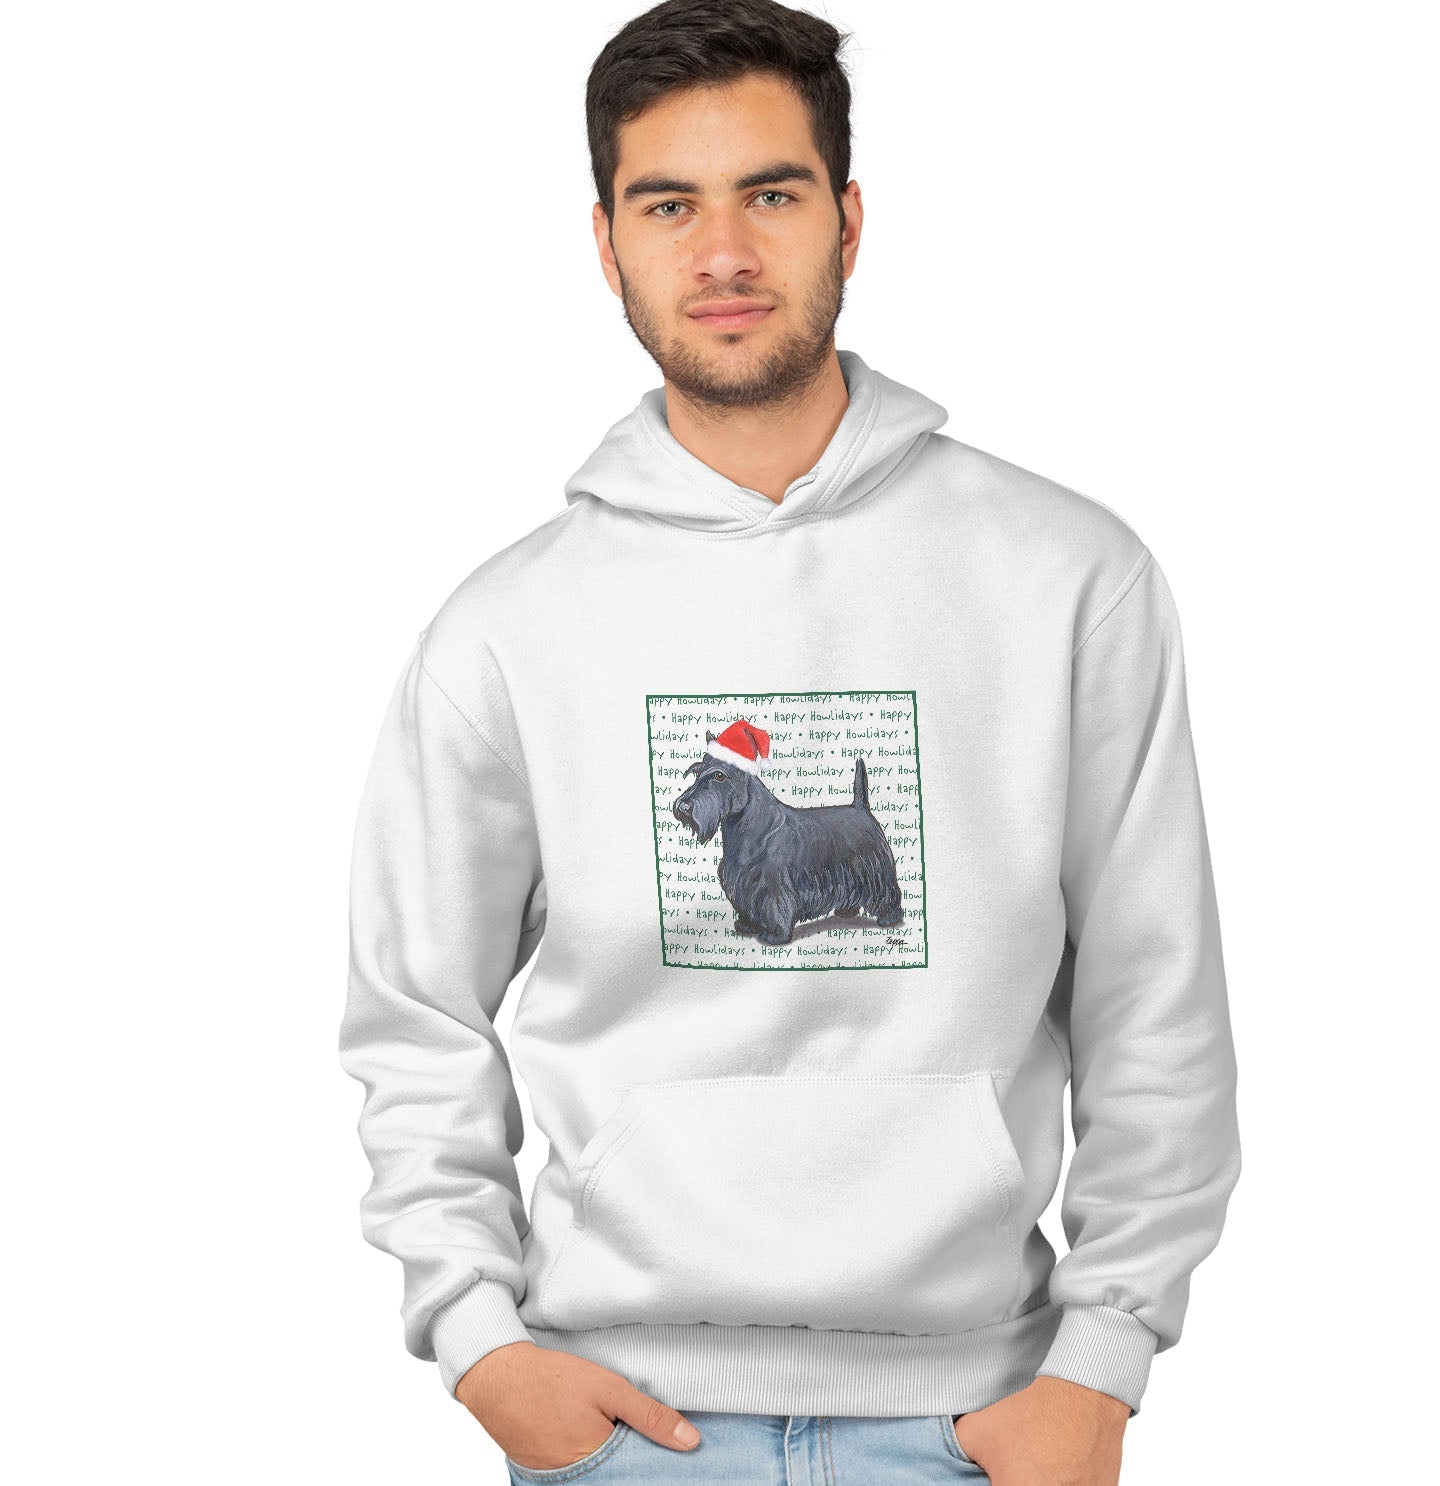 Scottish Terrier Happy Howlidays Text - Adult Unisex Hoodie Sweatshirt